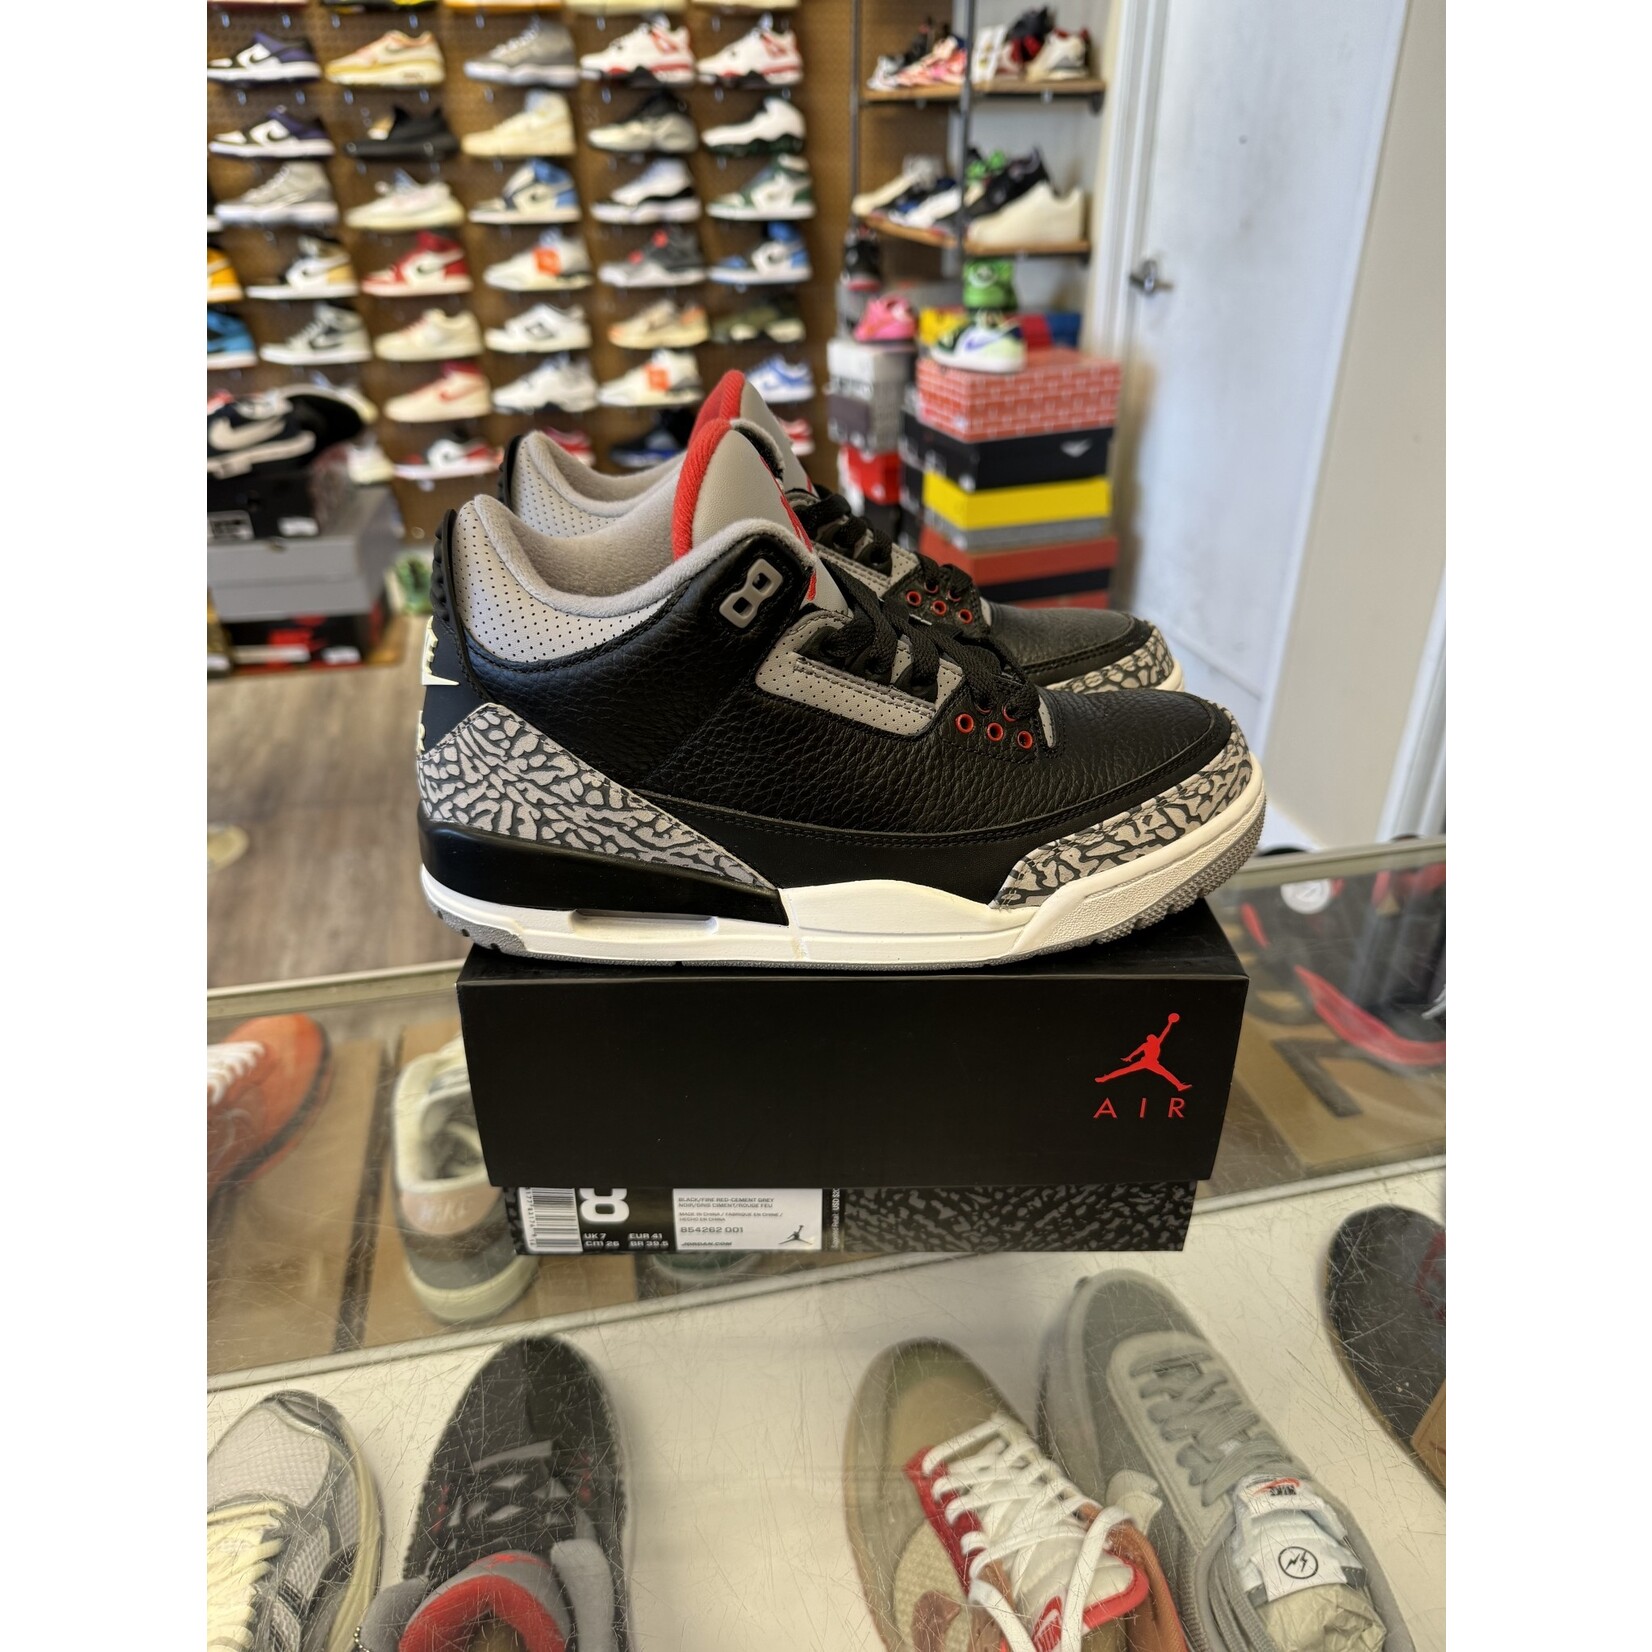 Jordan Jordan 3 Retro Black Cement (2018) Size 8, PREOWNED